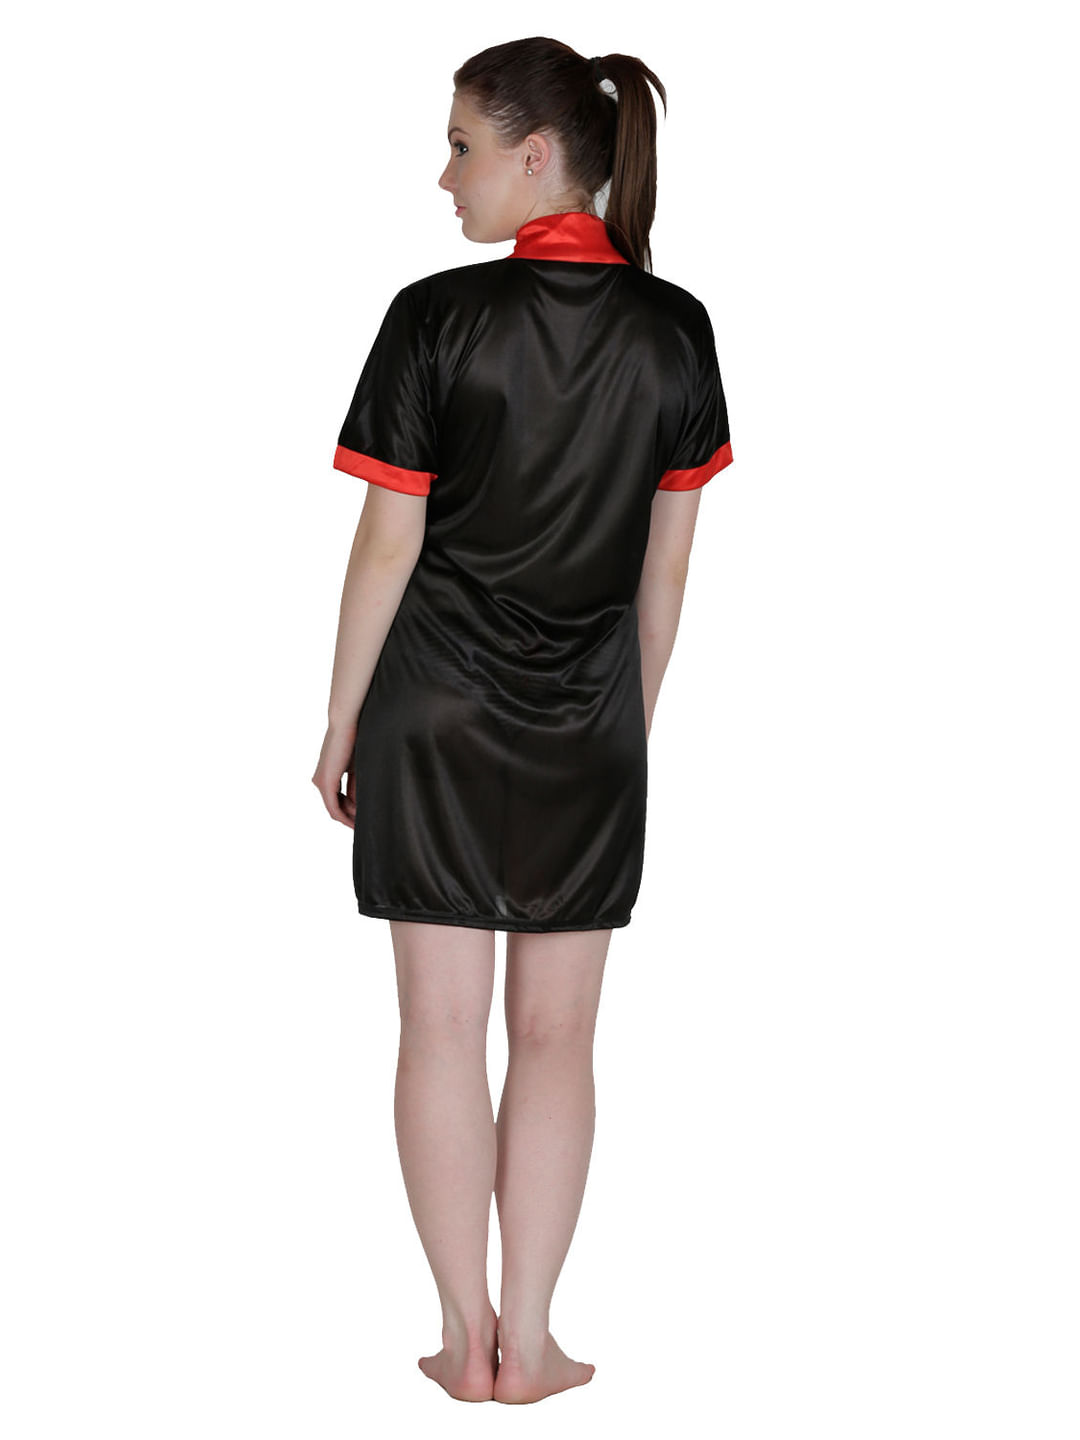 Satin Red, Black Robe, Housecoat (Free Size, HC-52)